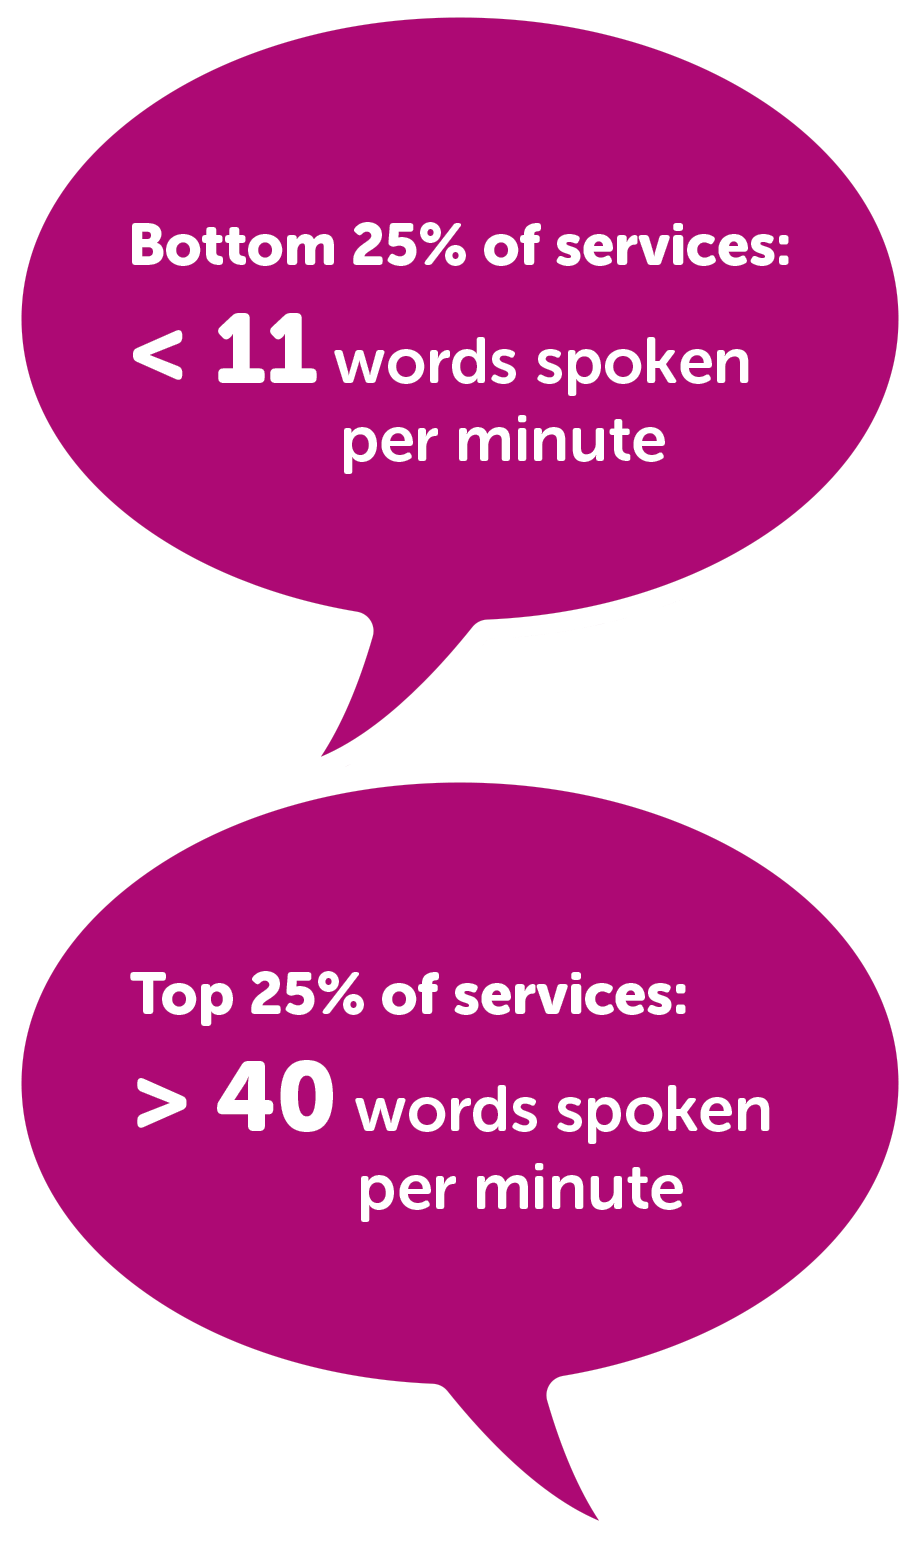  Words spoken per minute infographic